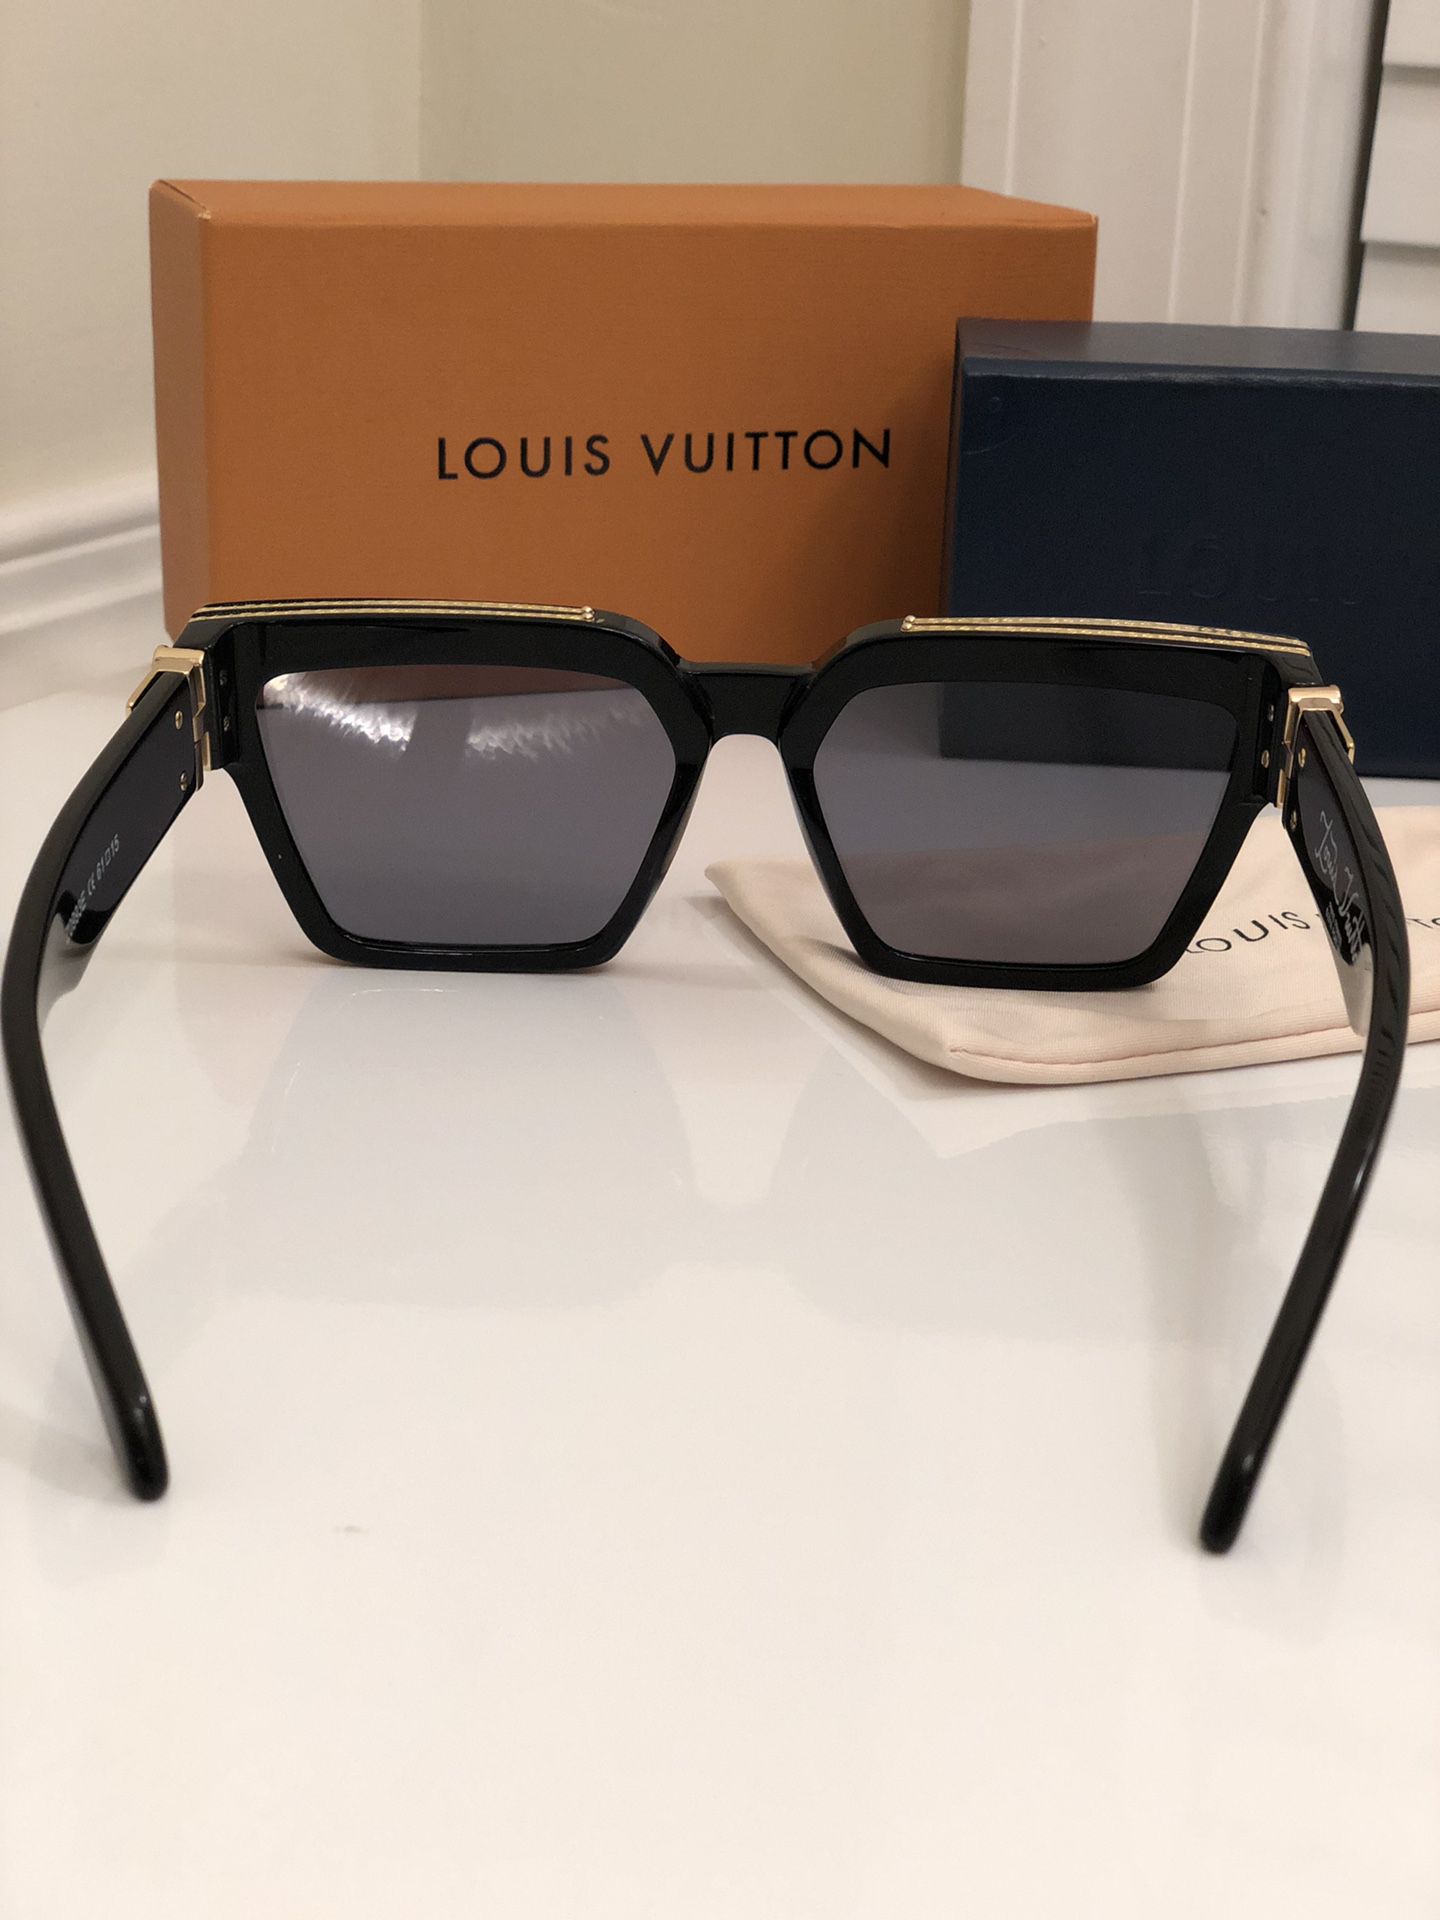 Louis Vuitton Millionaire 1.1 Sunglasses for Sale in Rocky Mount